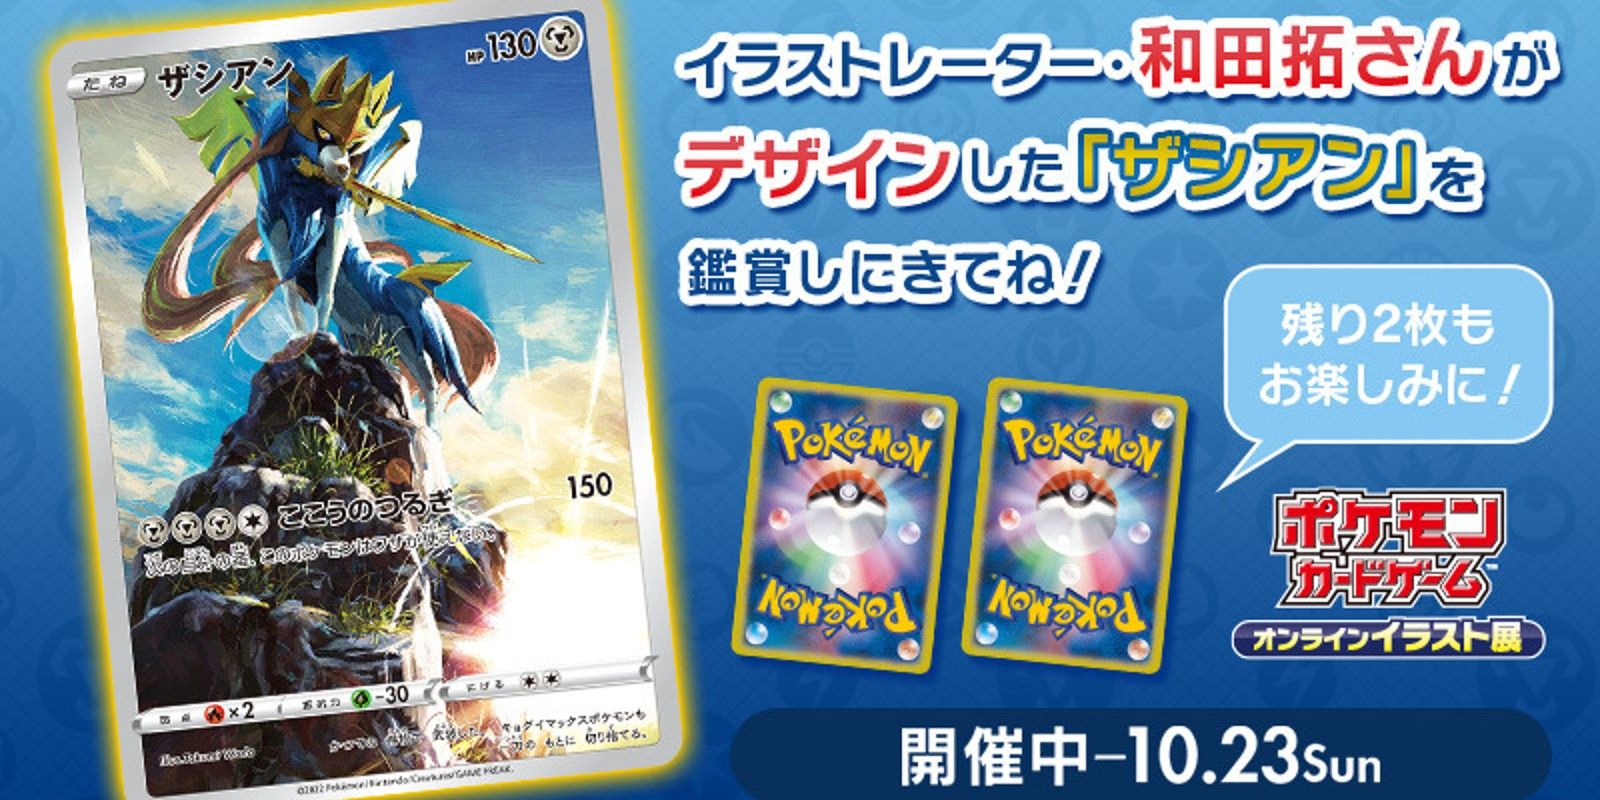 Takumi Wada's Pokémon TC Zacian card is so cool it deserves to be printed.